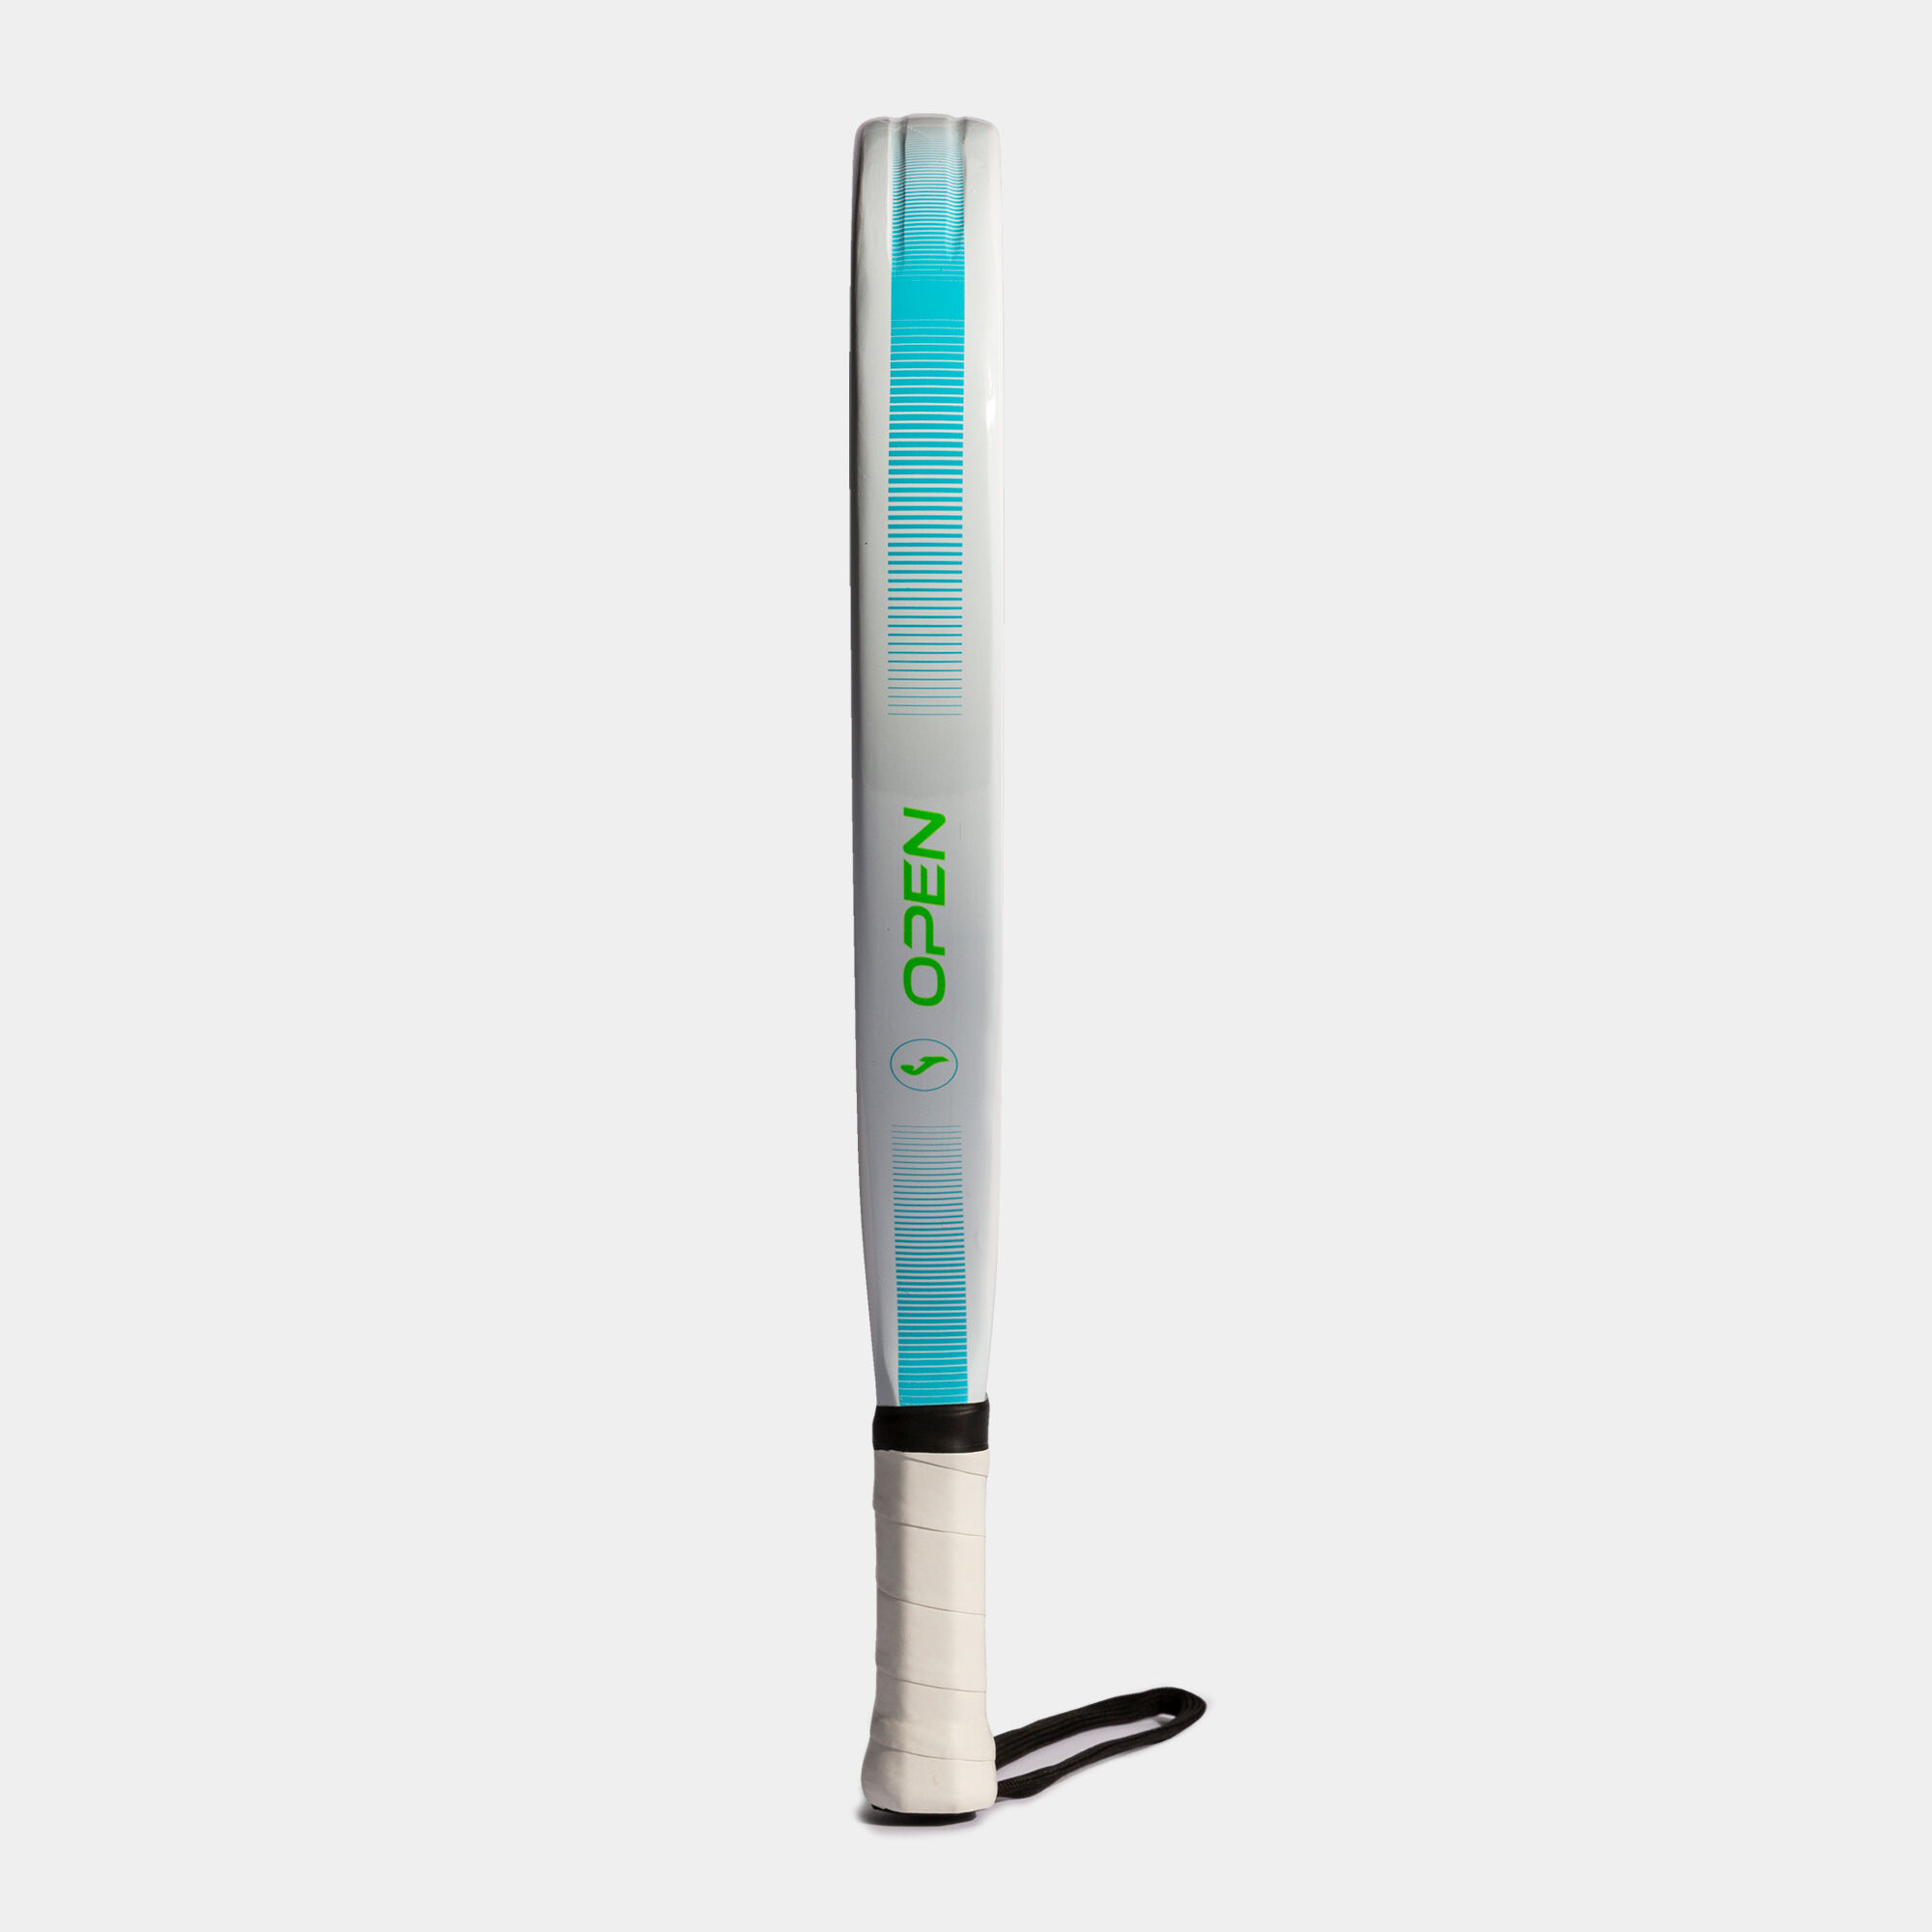 Padel racket Open white fluorescent turquoise